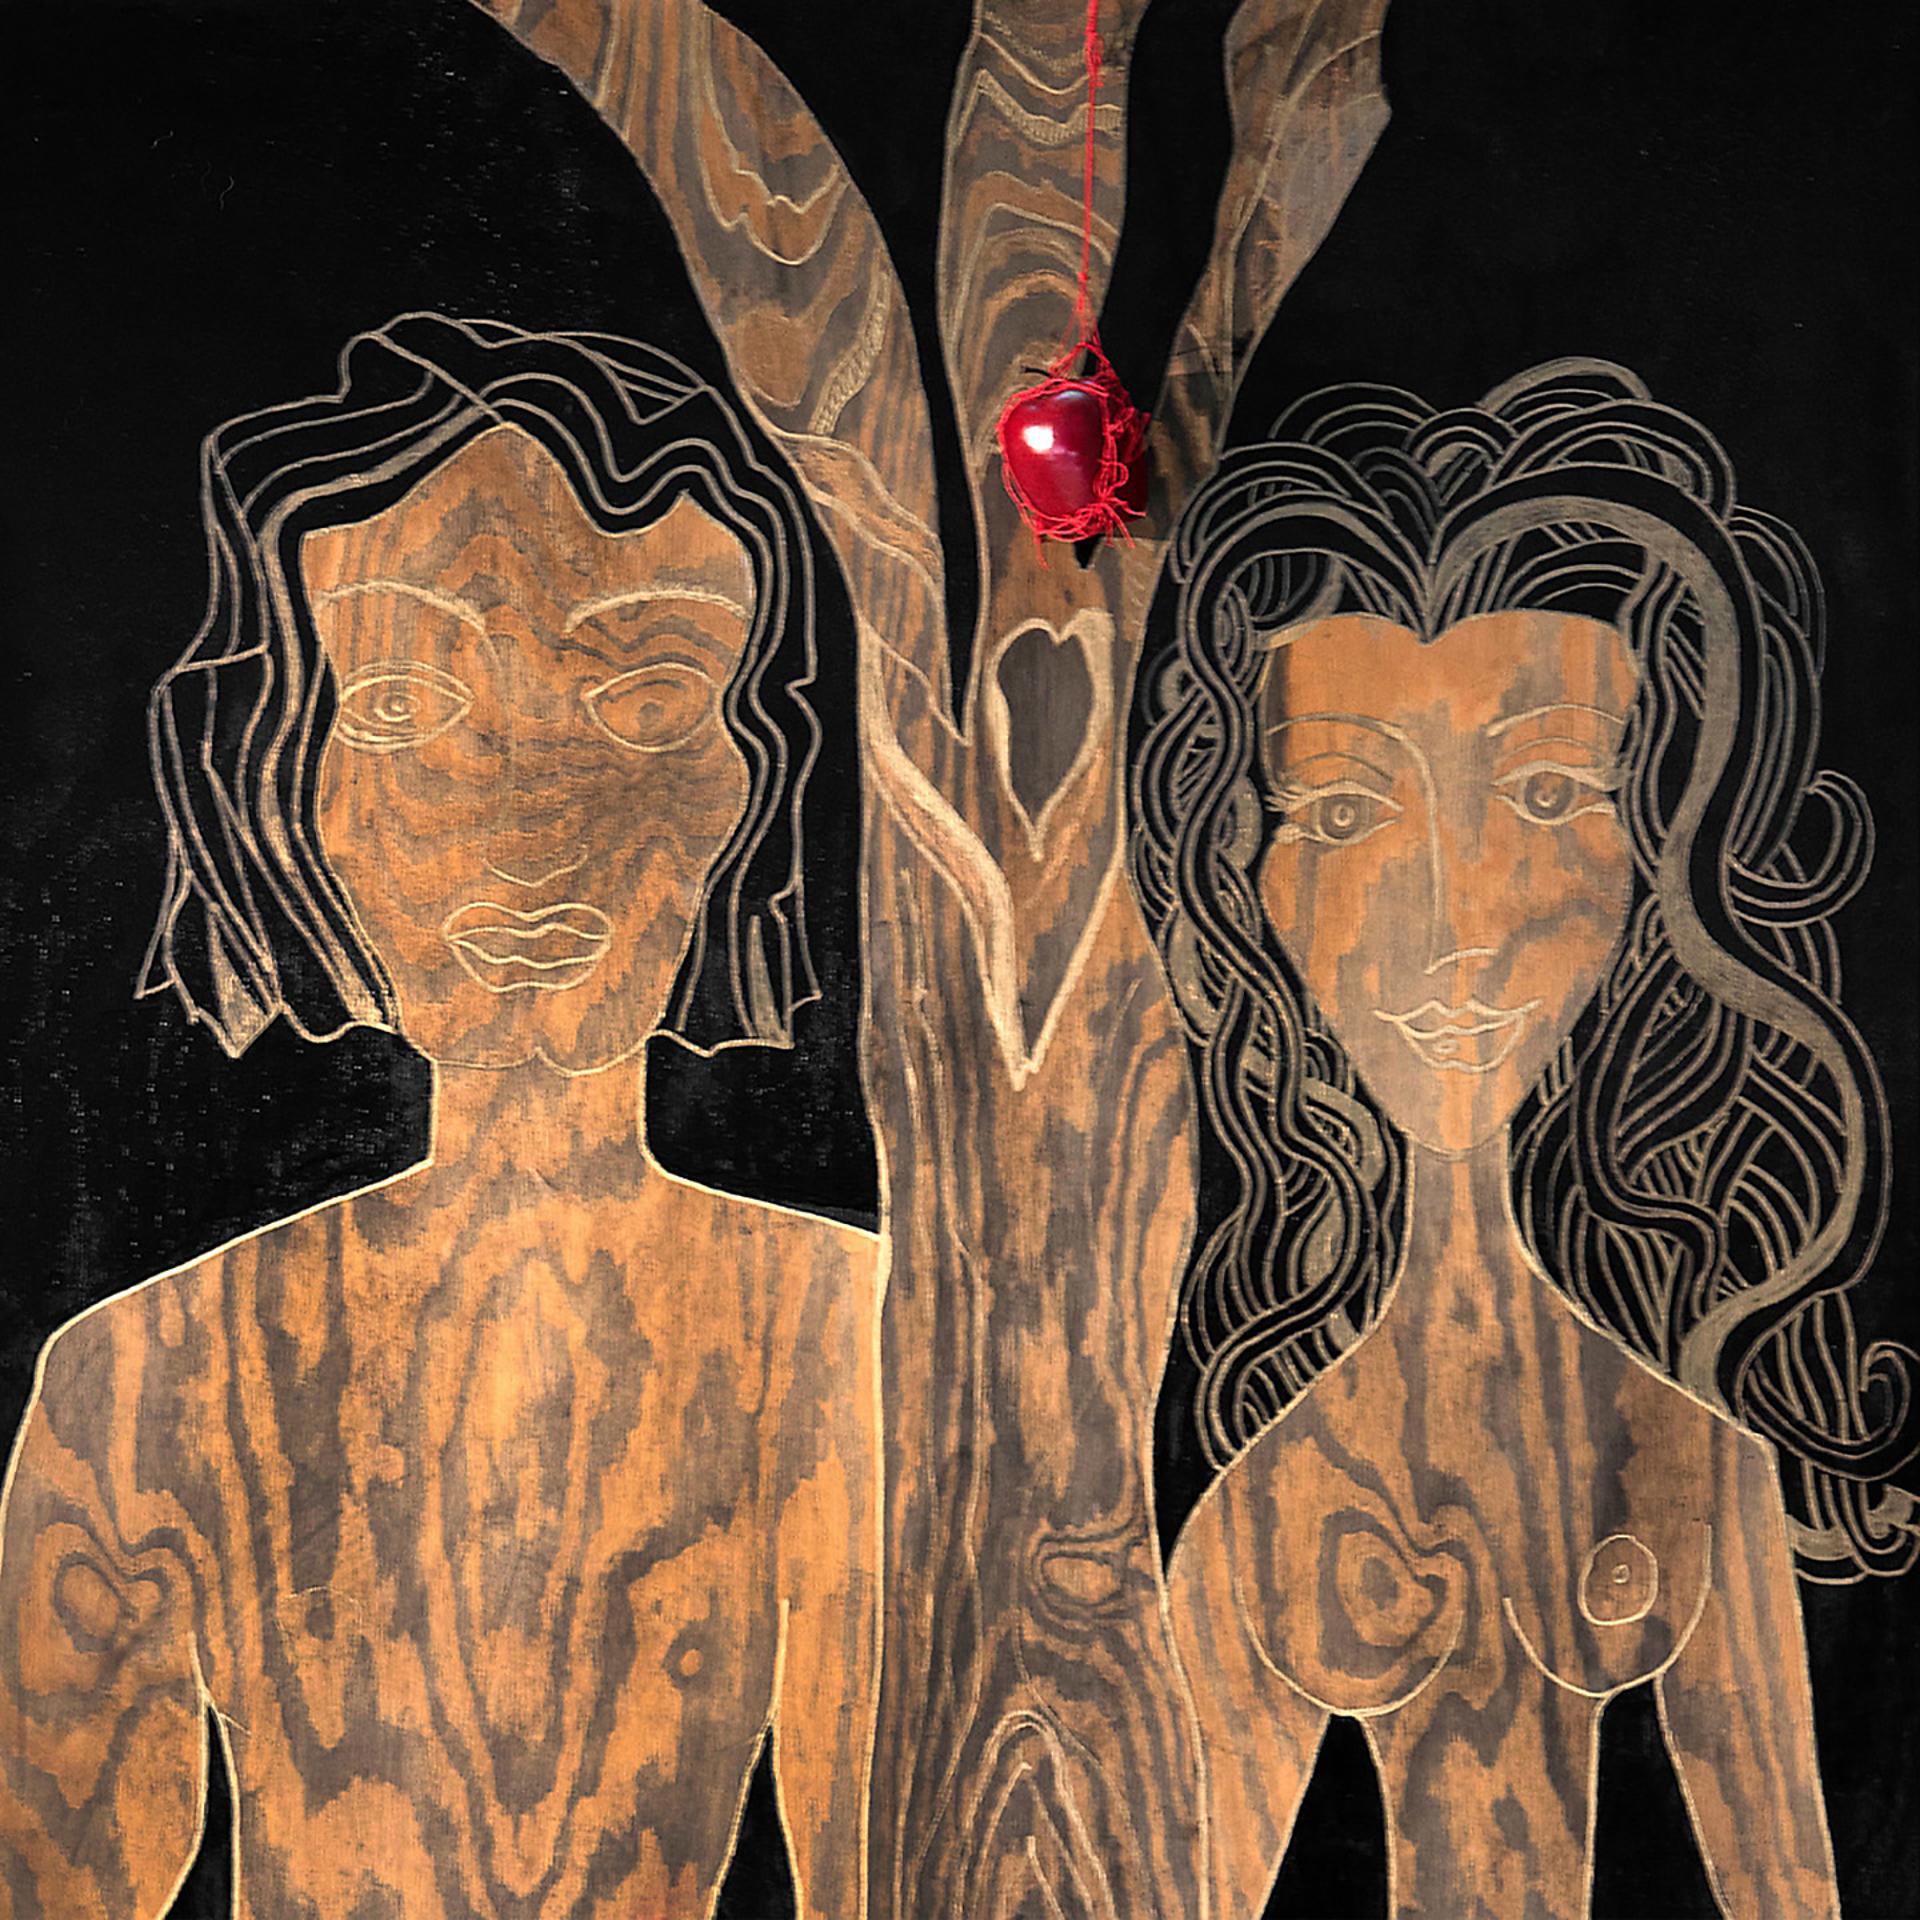 Постер альбома Adam & Eva